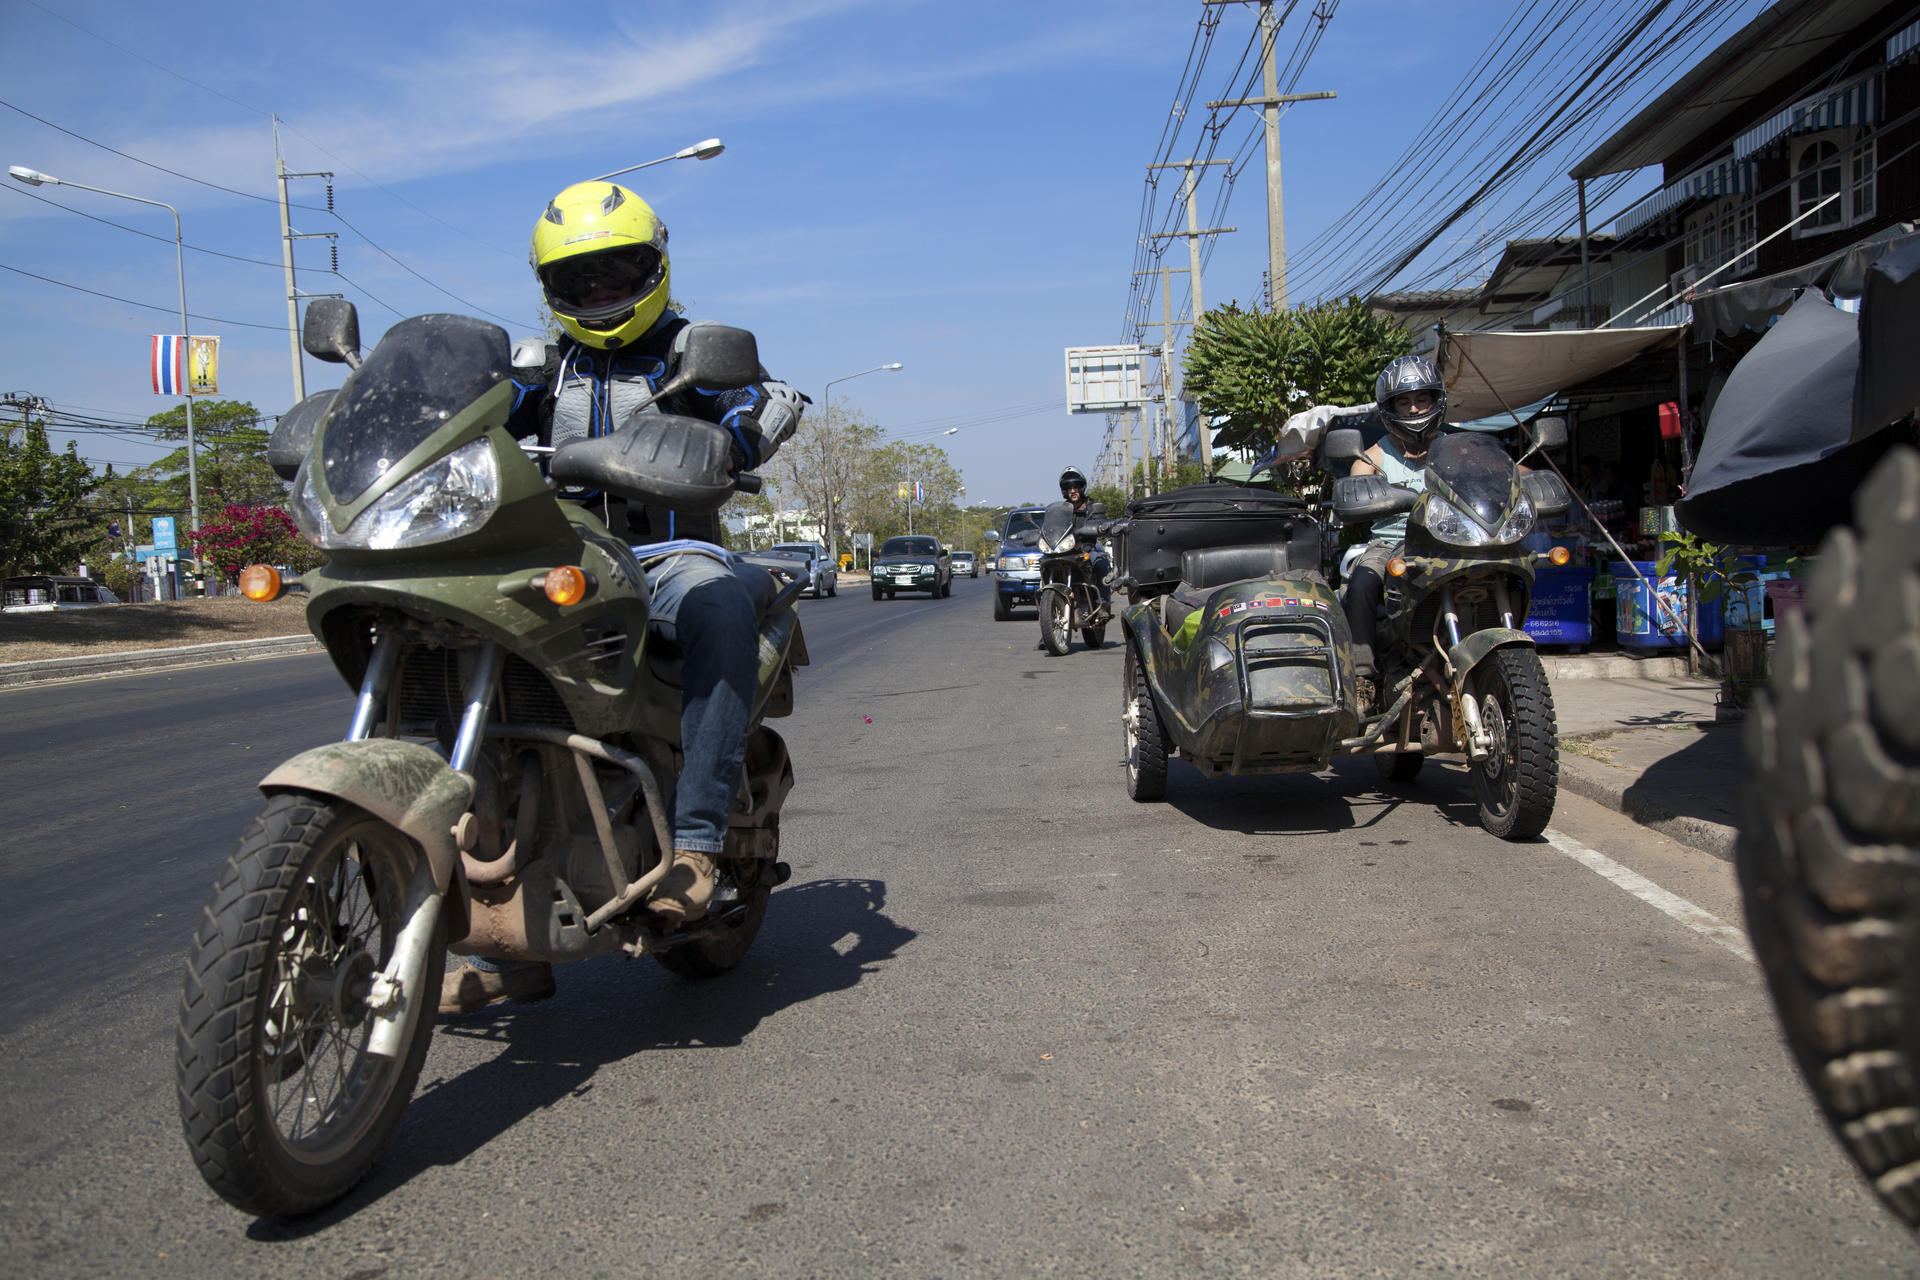 Corner Adventures' motorcycle tour participants in Thailand. Photos: Gary Jones